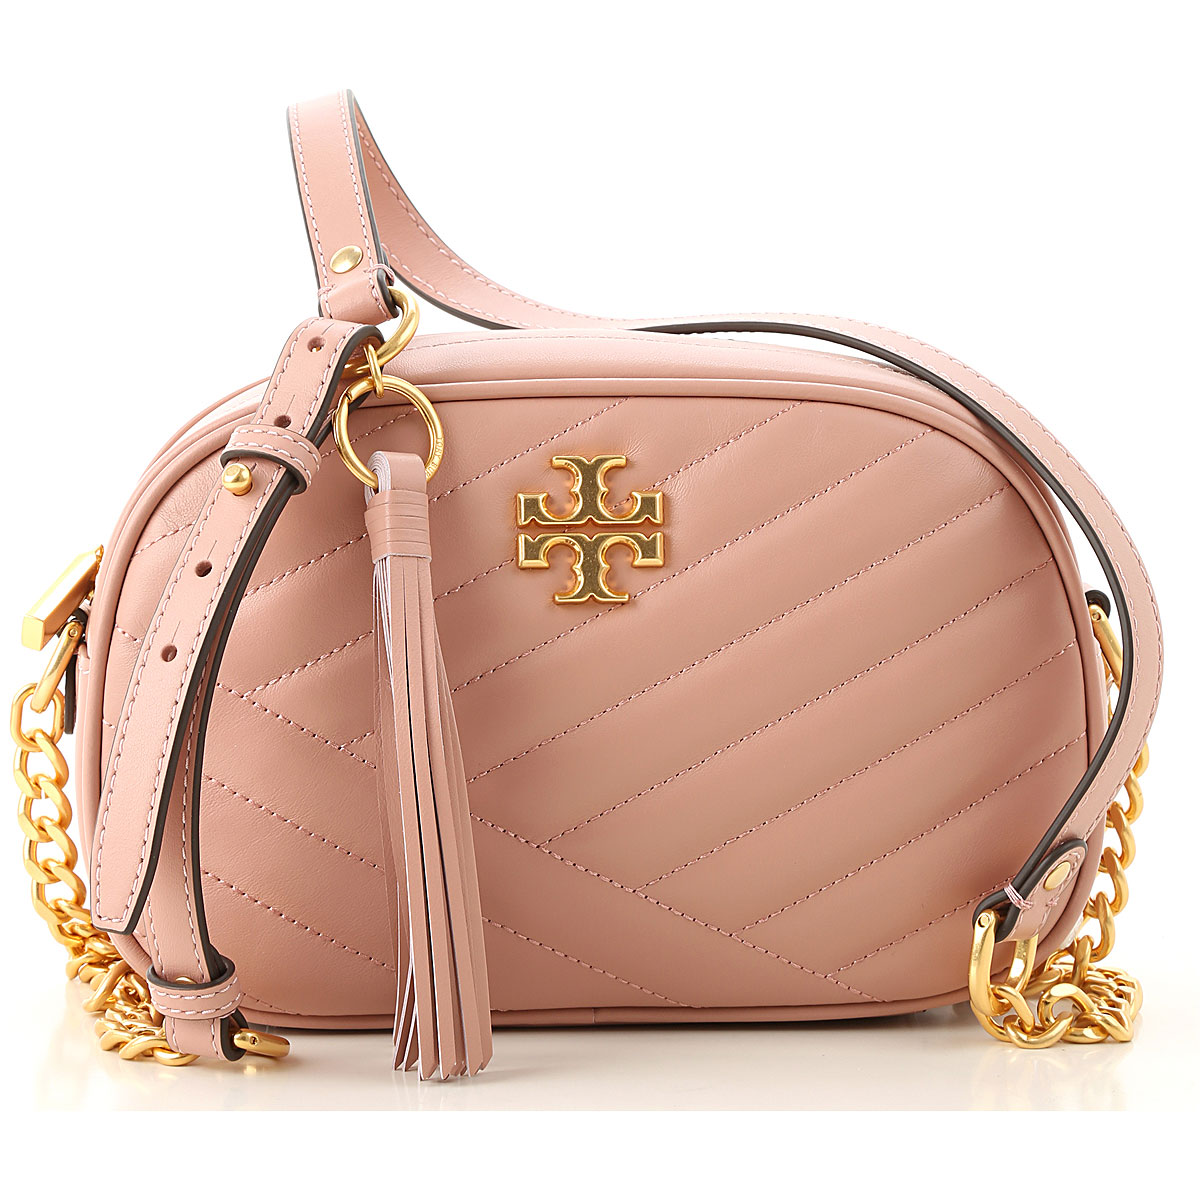 Handbags Tory Burch, Style code: 57769-689-